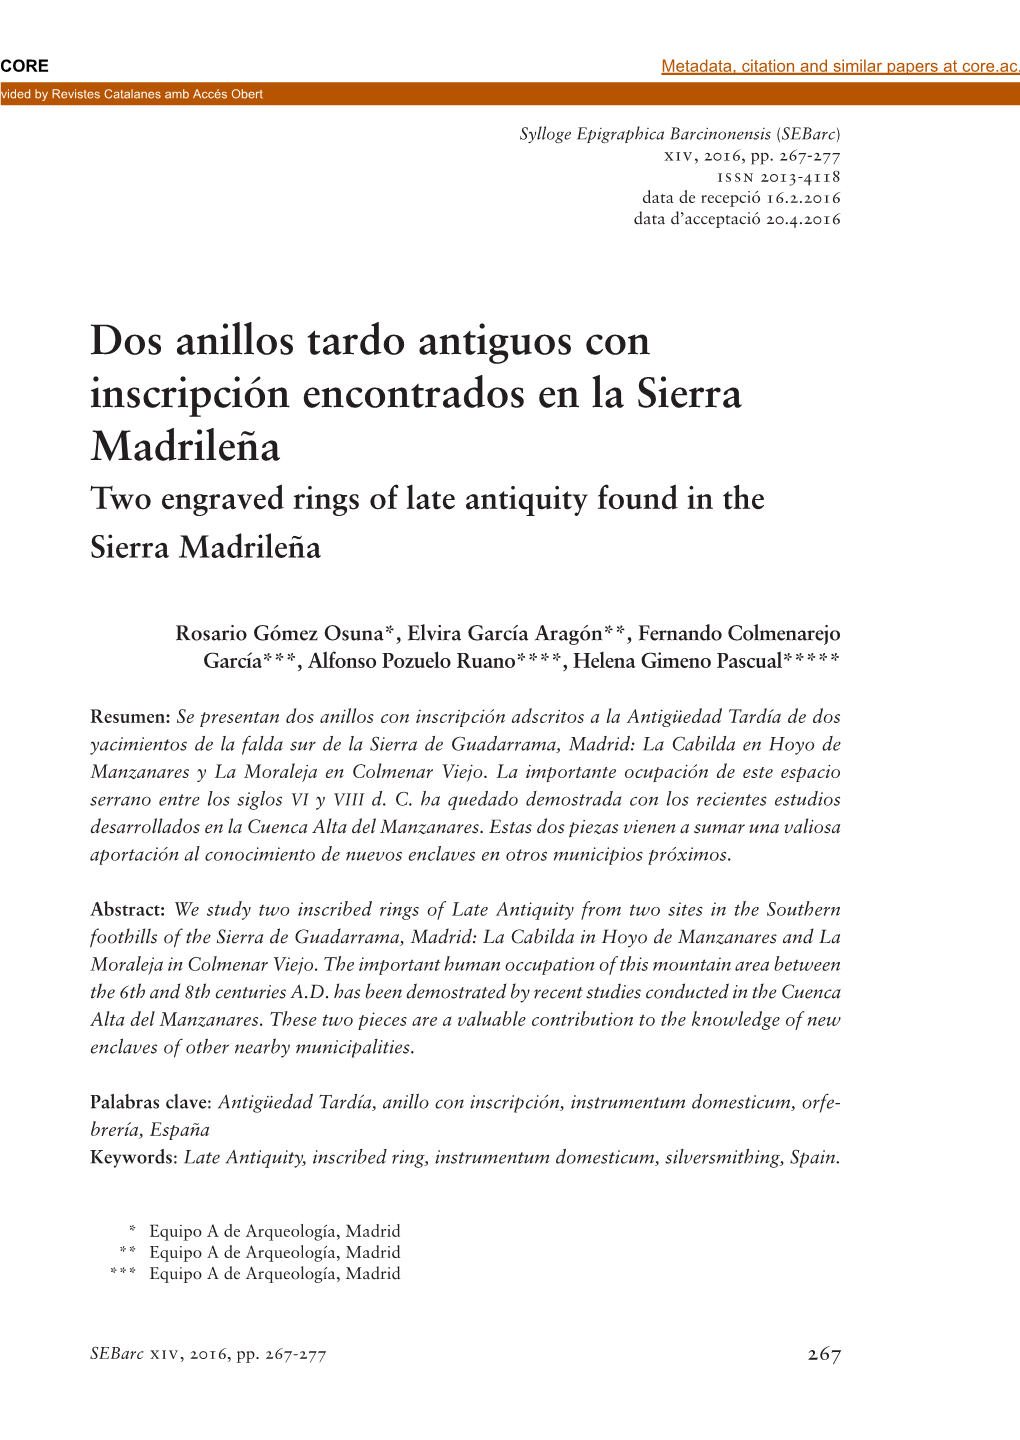 Dos Anillos Tardo Antiguos Con Inscripción Encontrados En La Sierra Madrileña Two Engraved Rings of Late Antiquity Found in the Sierra Madrileña